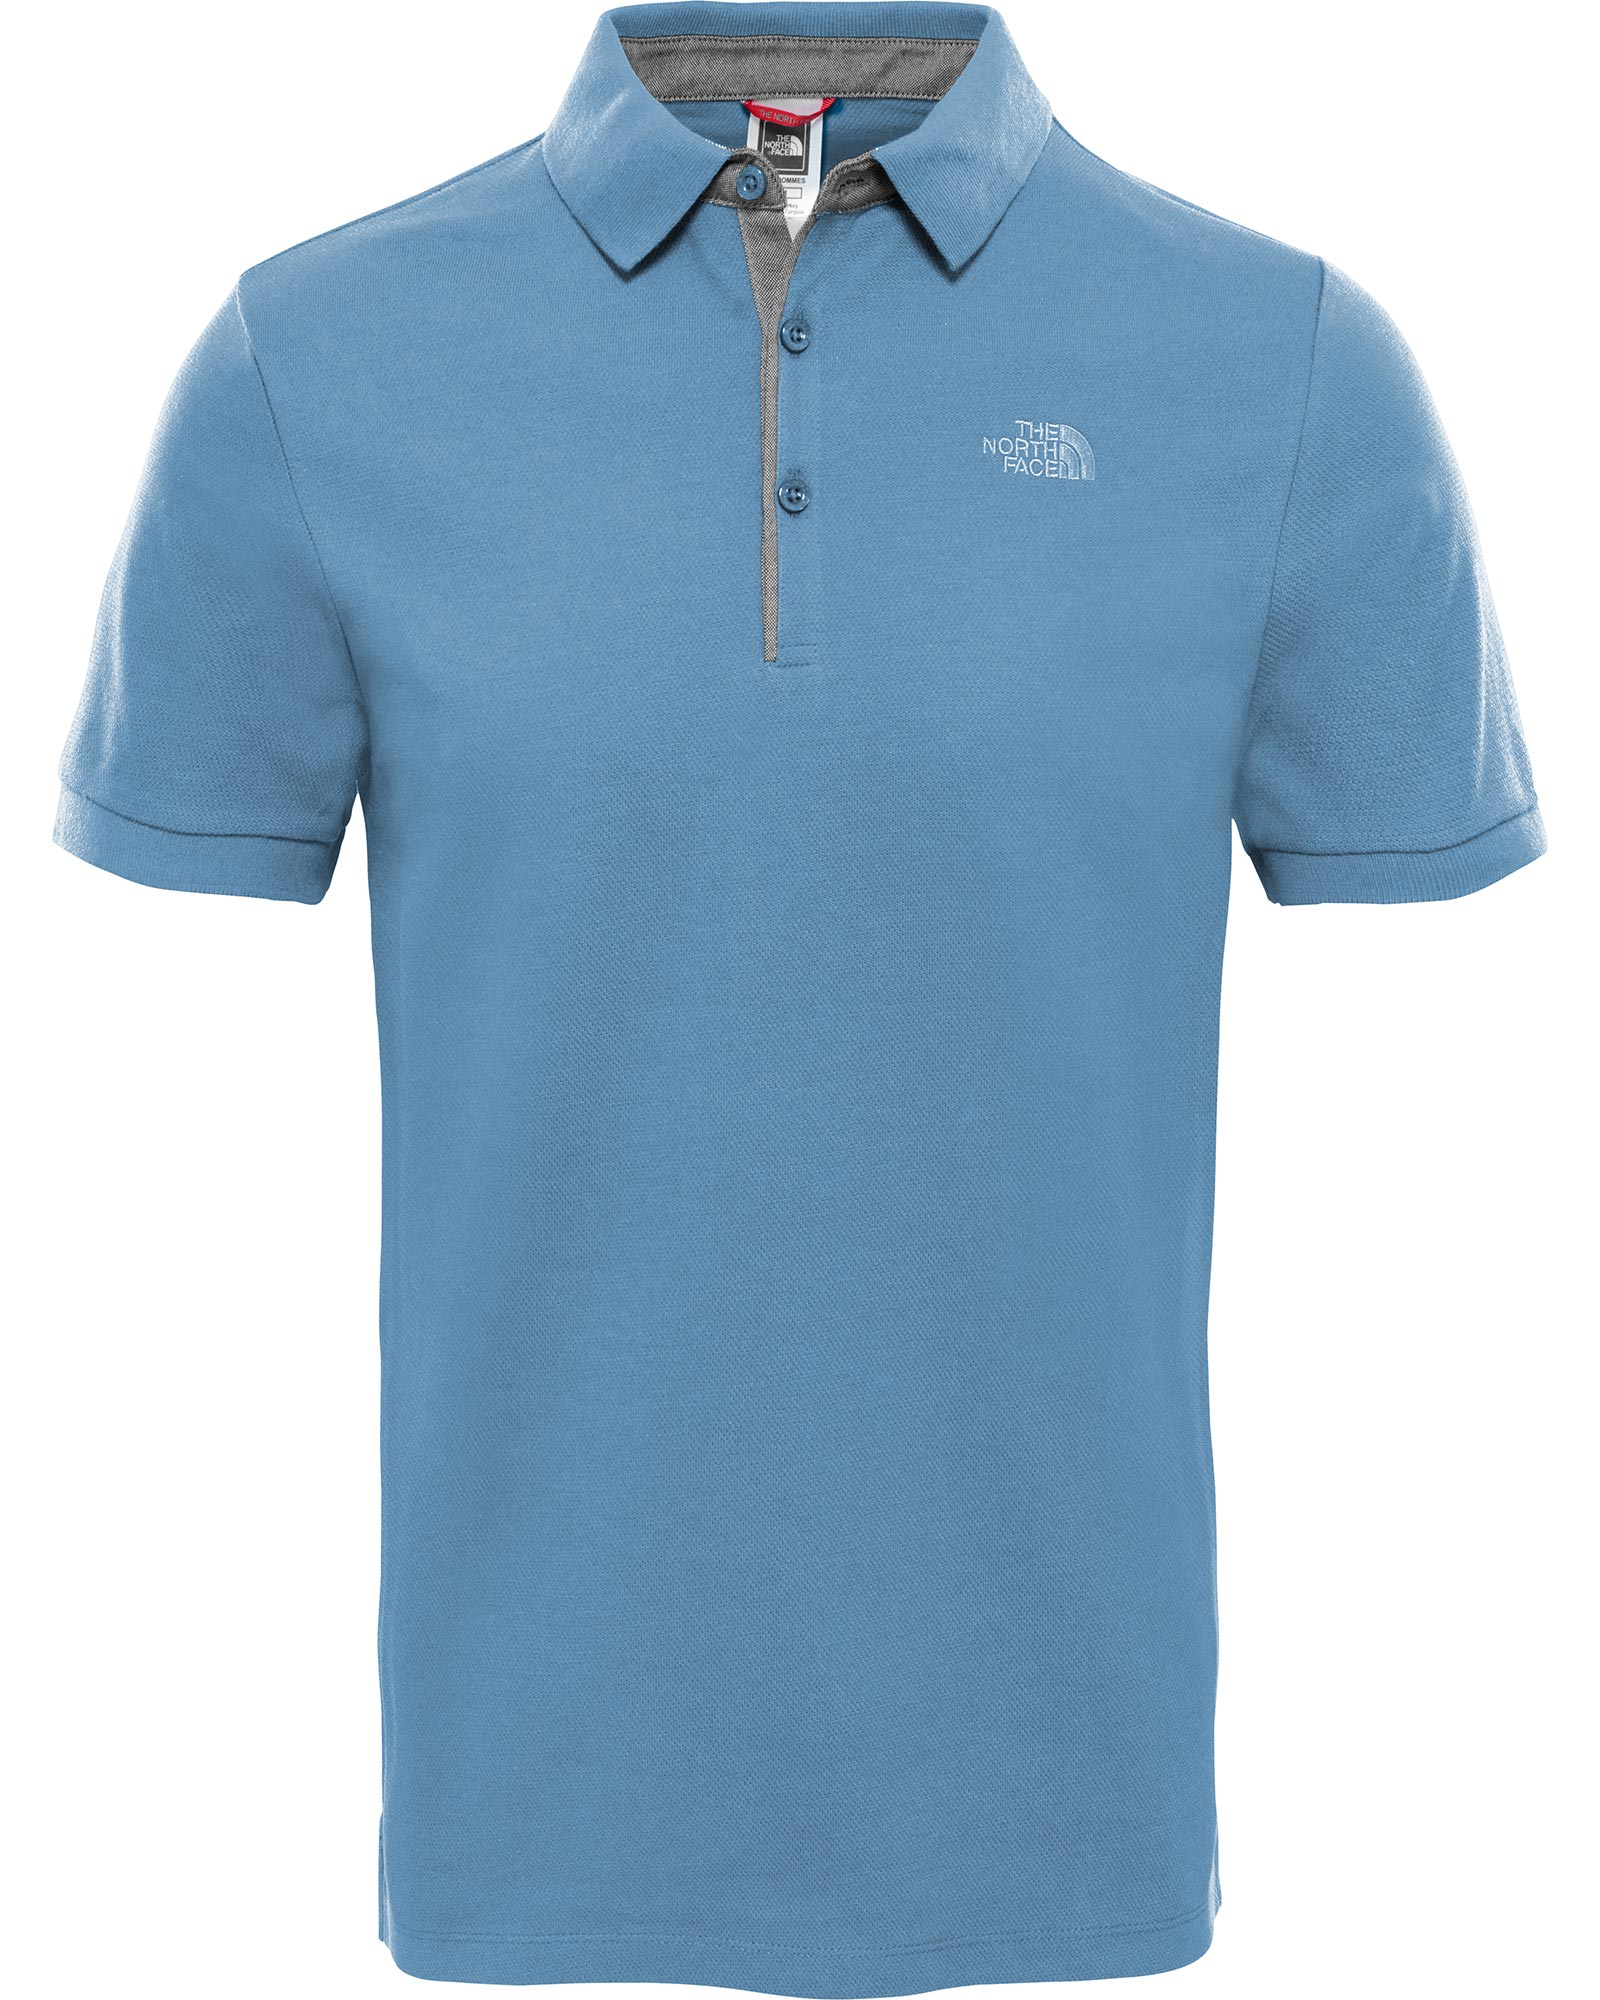 The North Face Premium Men’s Piquet Polo T Shirt - Moonlight Blue S